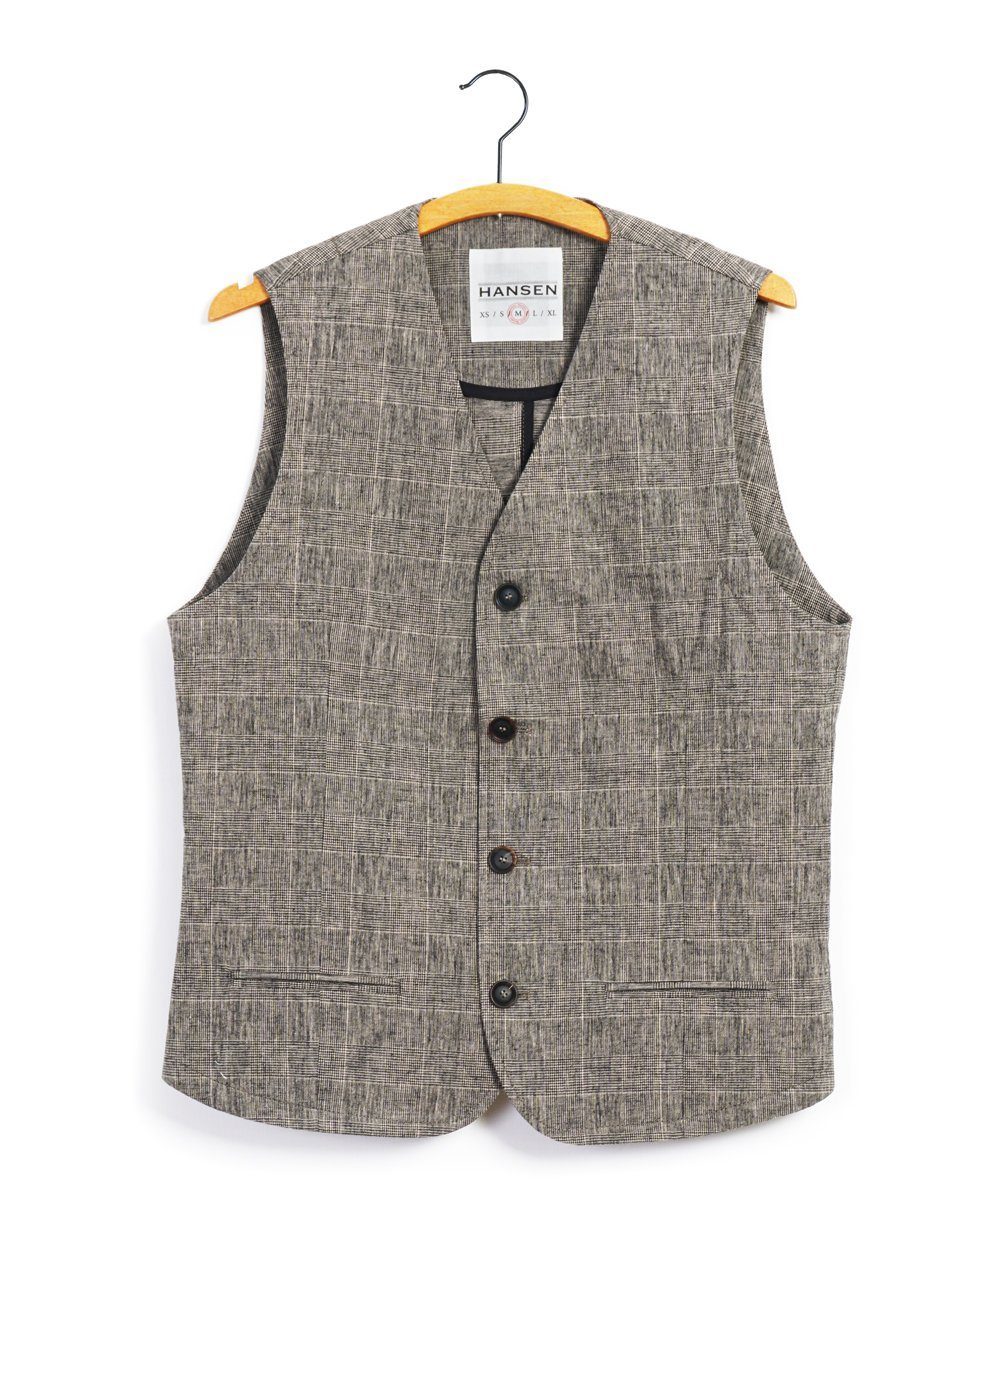 HANSEN GARMENTS - DANIEL | Four Button Waistcoat | Check 2 - HANSEN Garments